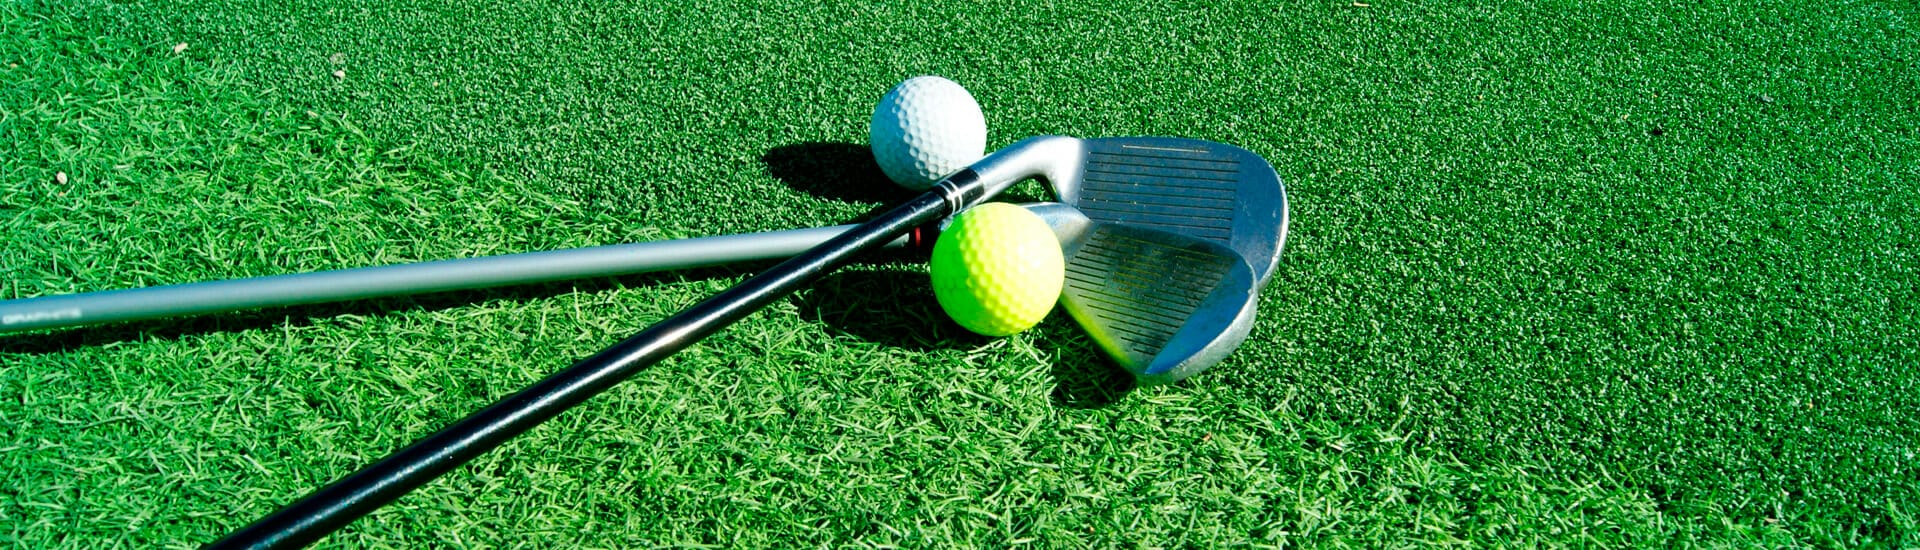 Modelos de césped artificial para golf